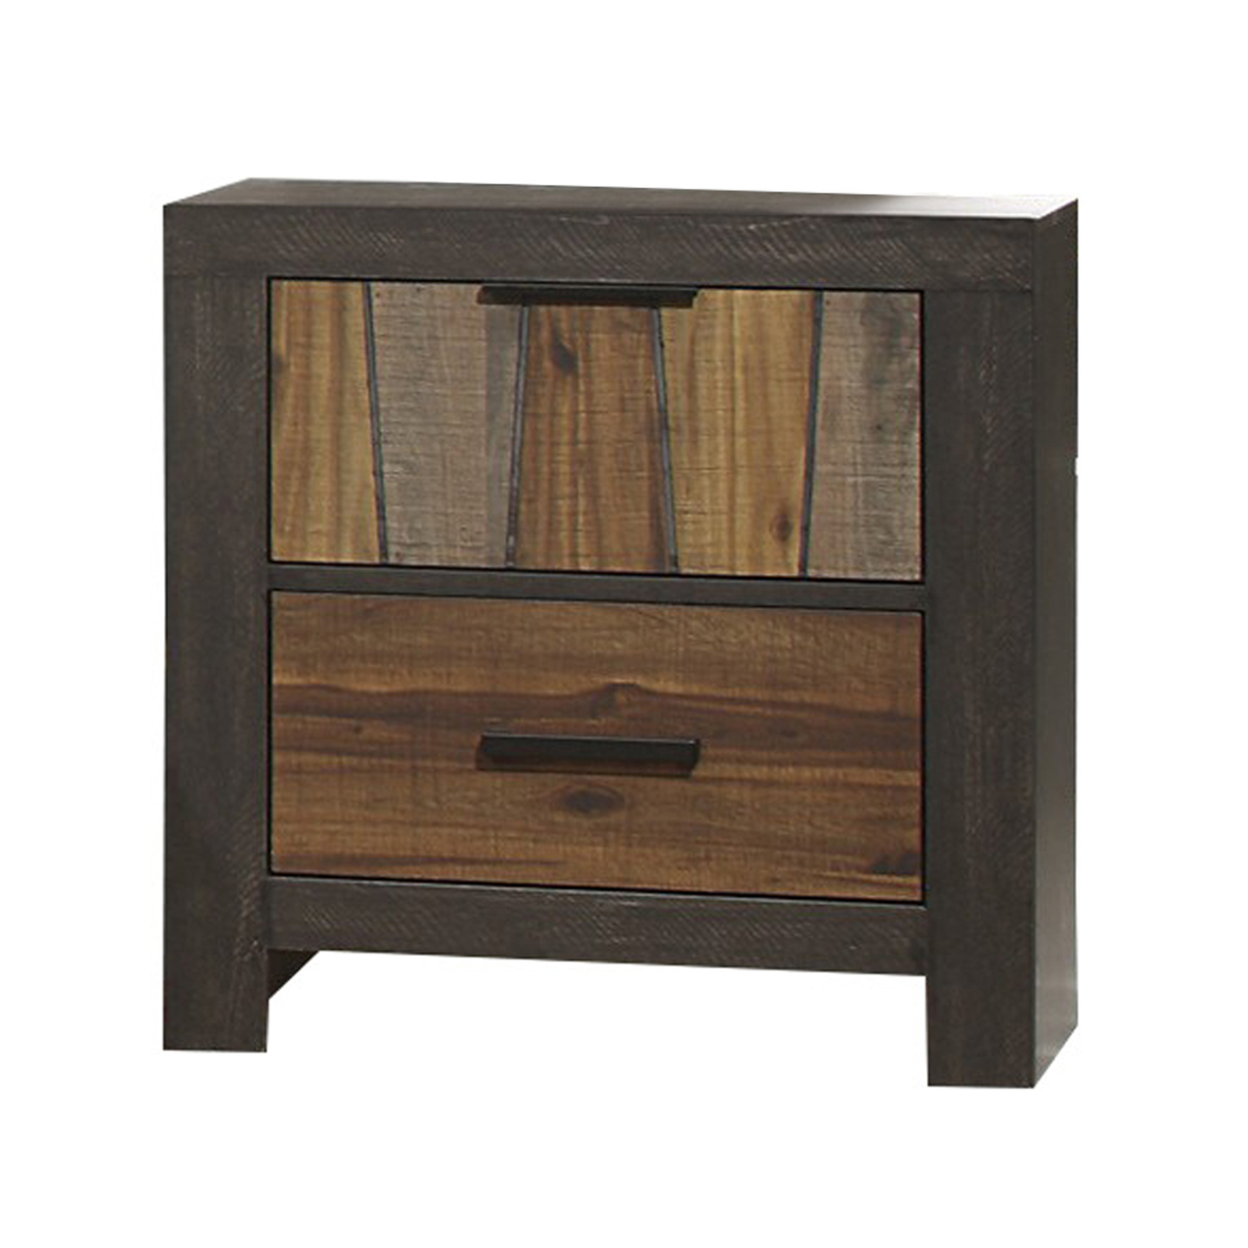 Plank Style 2 Drawer Wooden Nightstand With Metal Bar Handles, Brown- Saltoro Sherpi